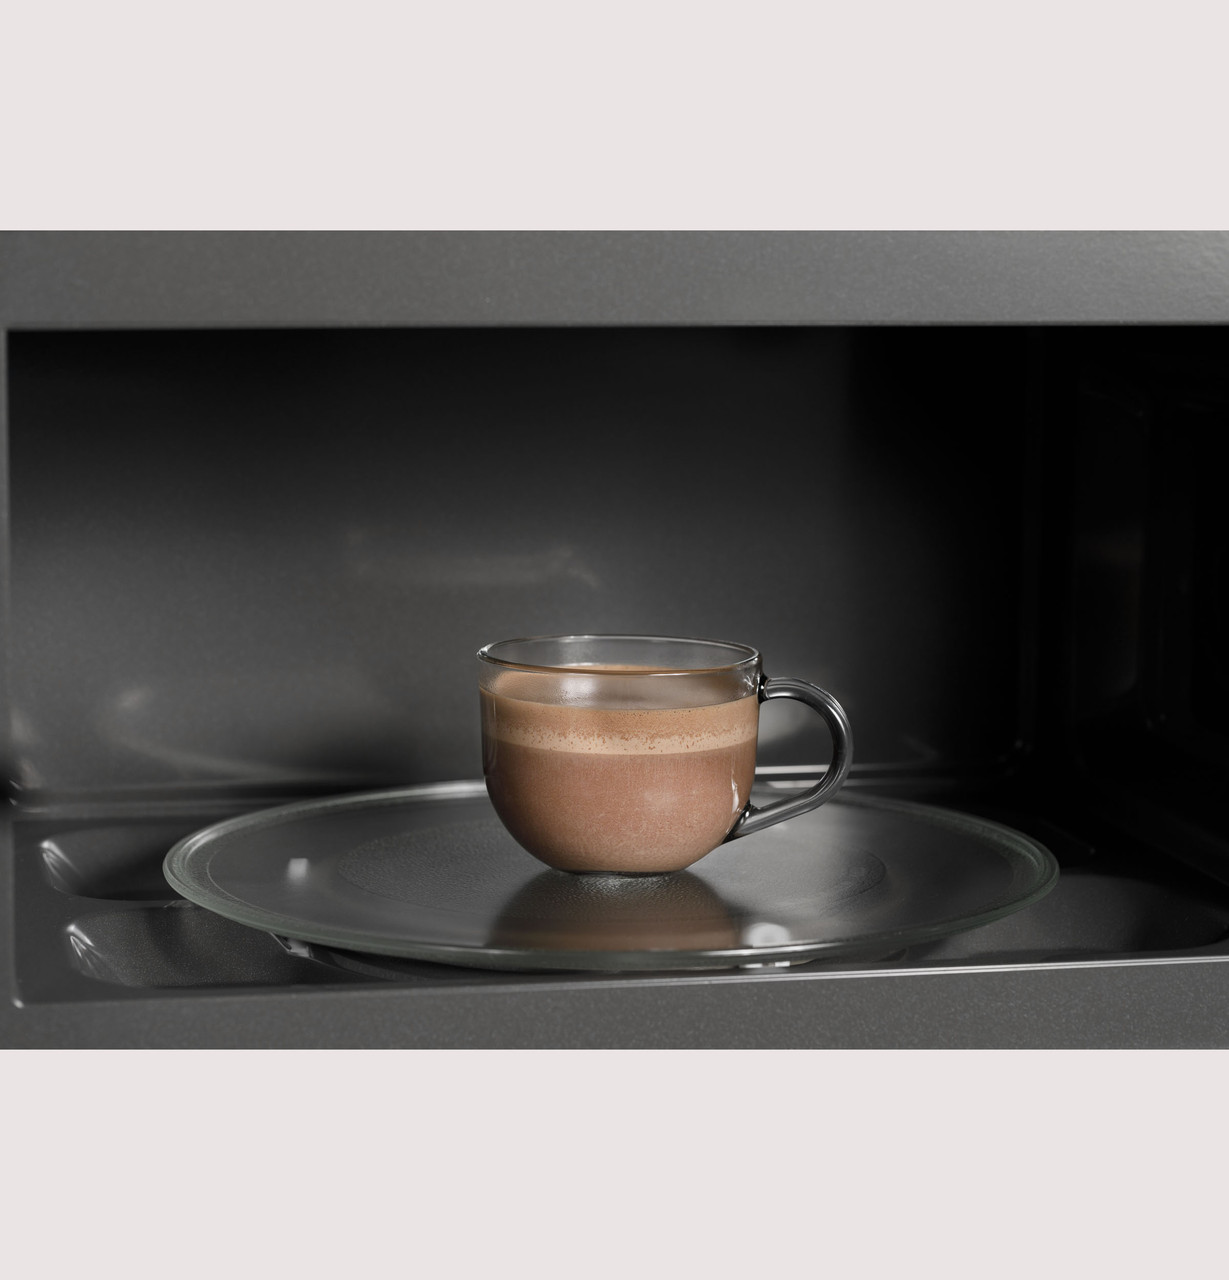 Coffee maker/Moka pot for microwave 2 cups Max - MicroMax